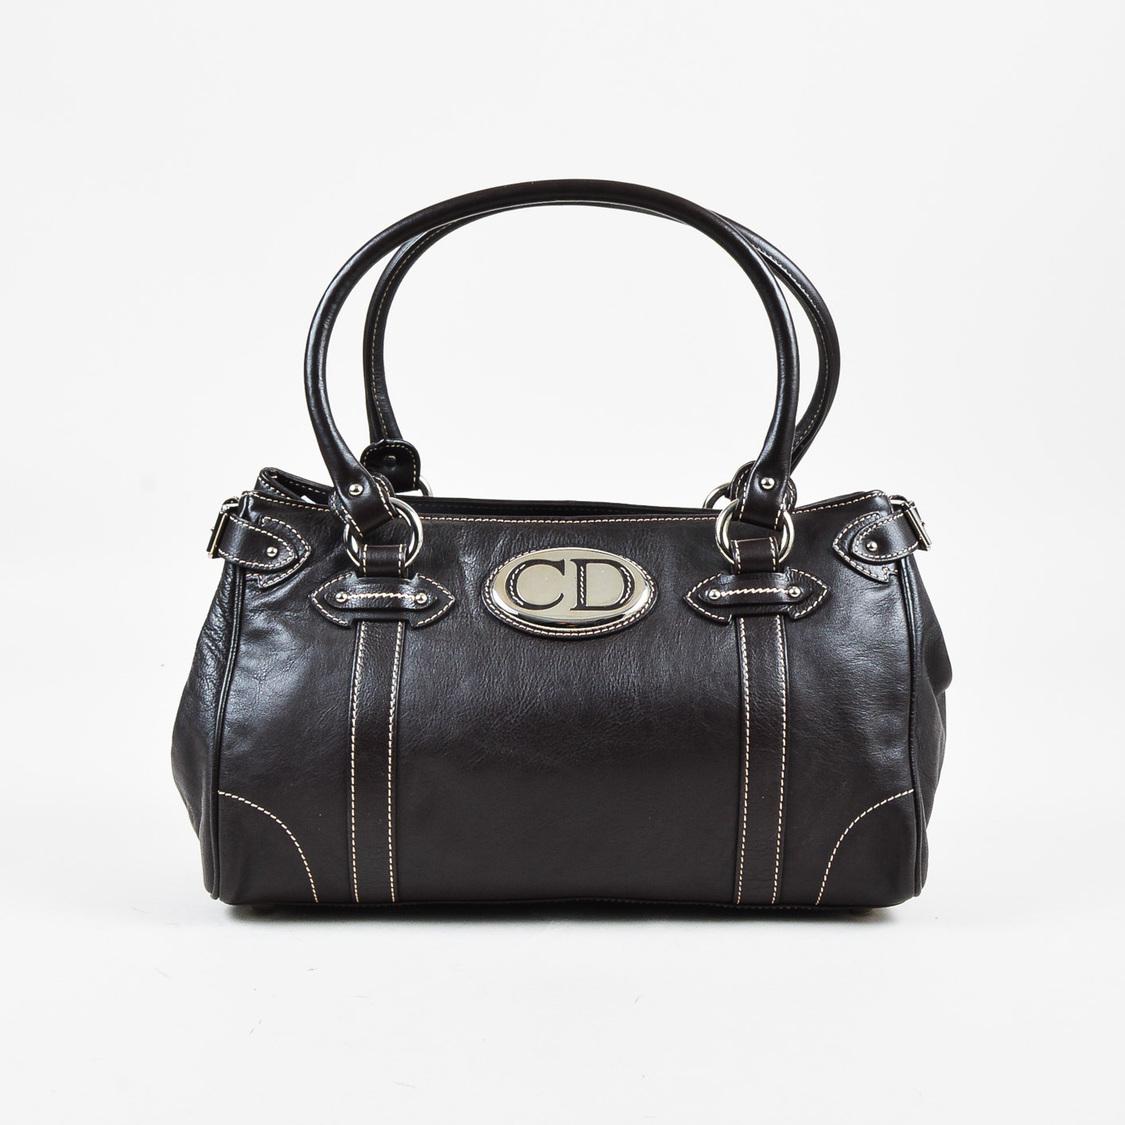 Lyst - Dior 1 Brown Leather Top Handle Tote Bag in Brown